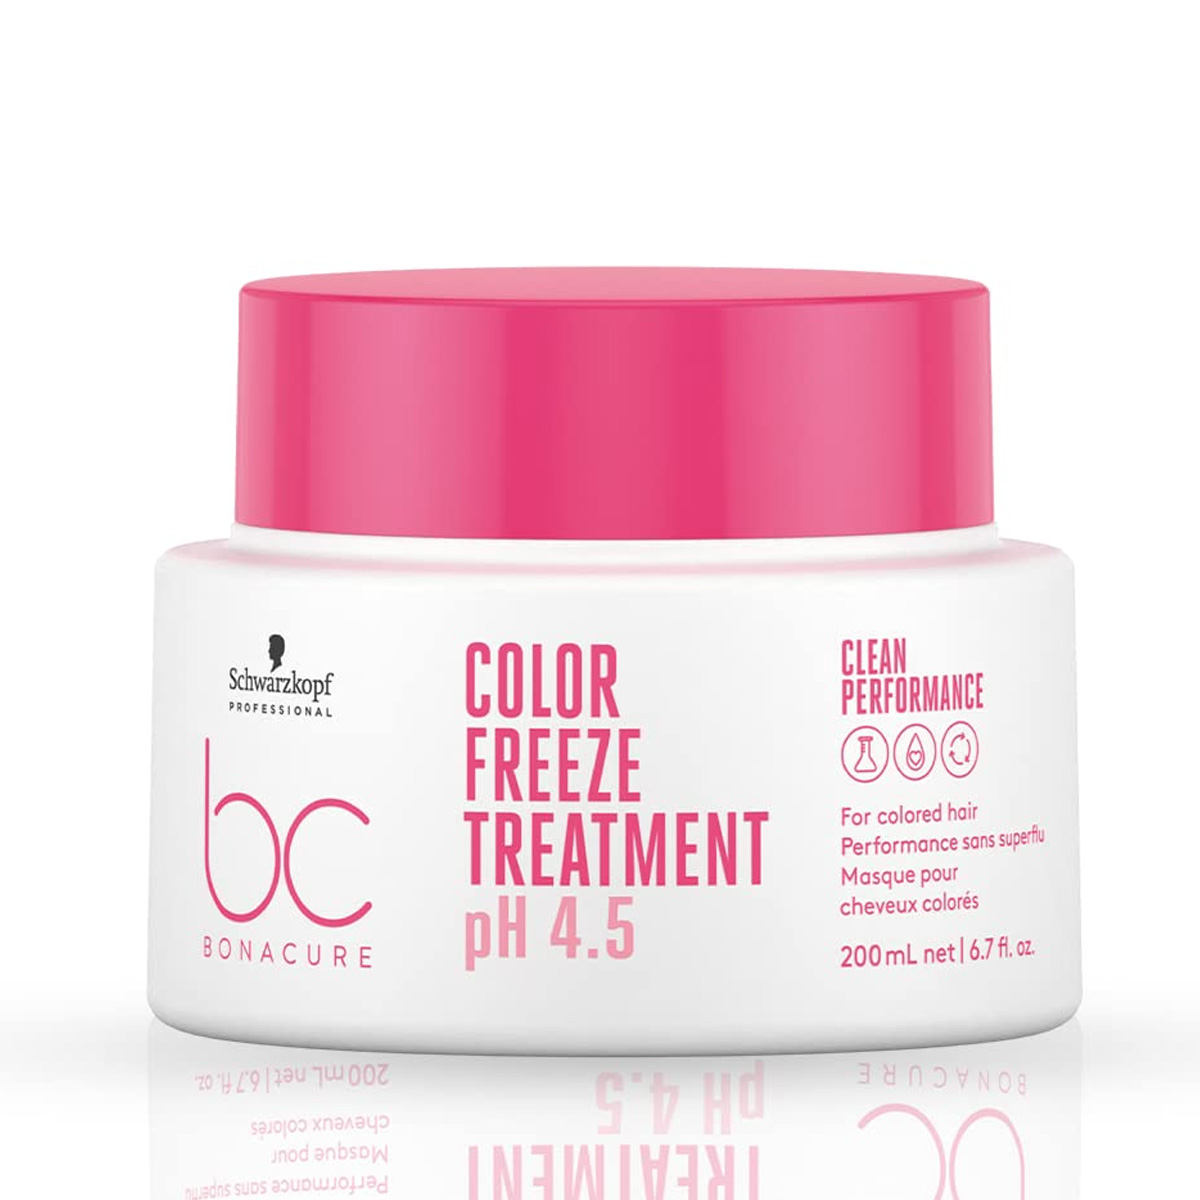 Schwarzkopf Bonacure Color Freeze Treatment PH4.5, 200ml